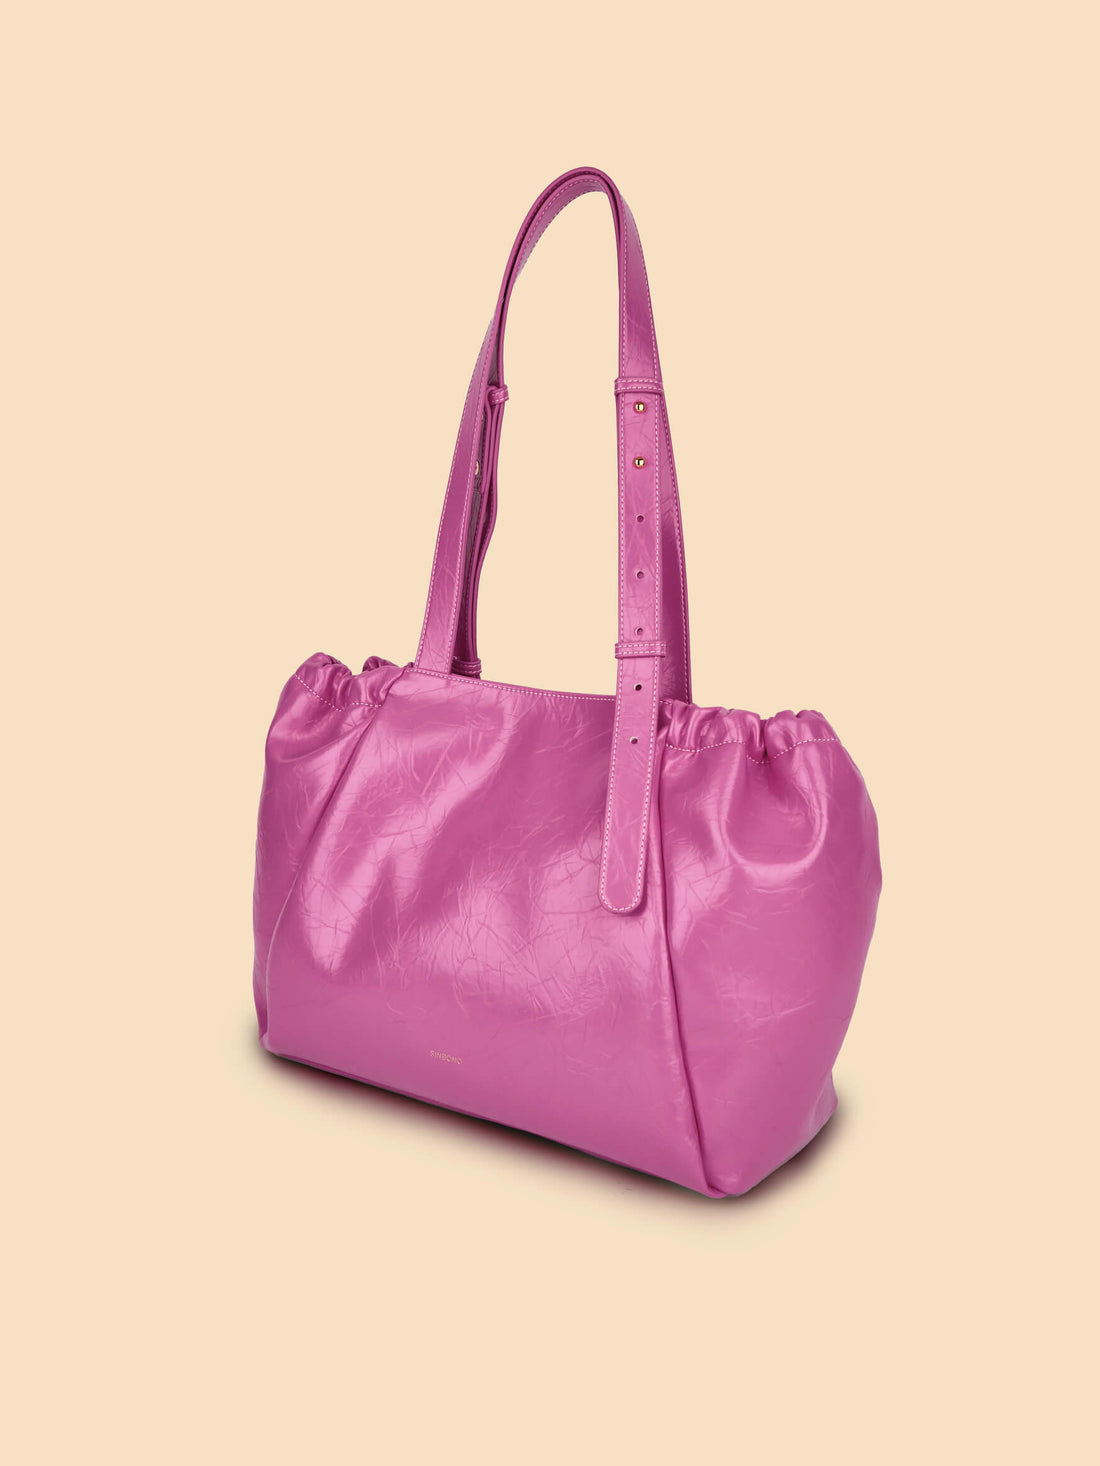 SINBONO Halle Hobo Tote Bag  Bright Pink